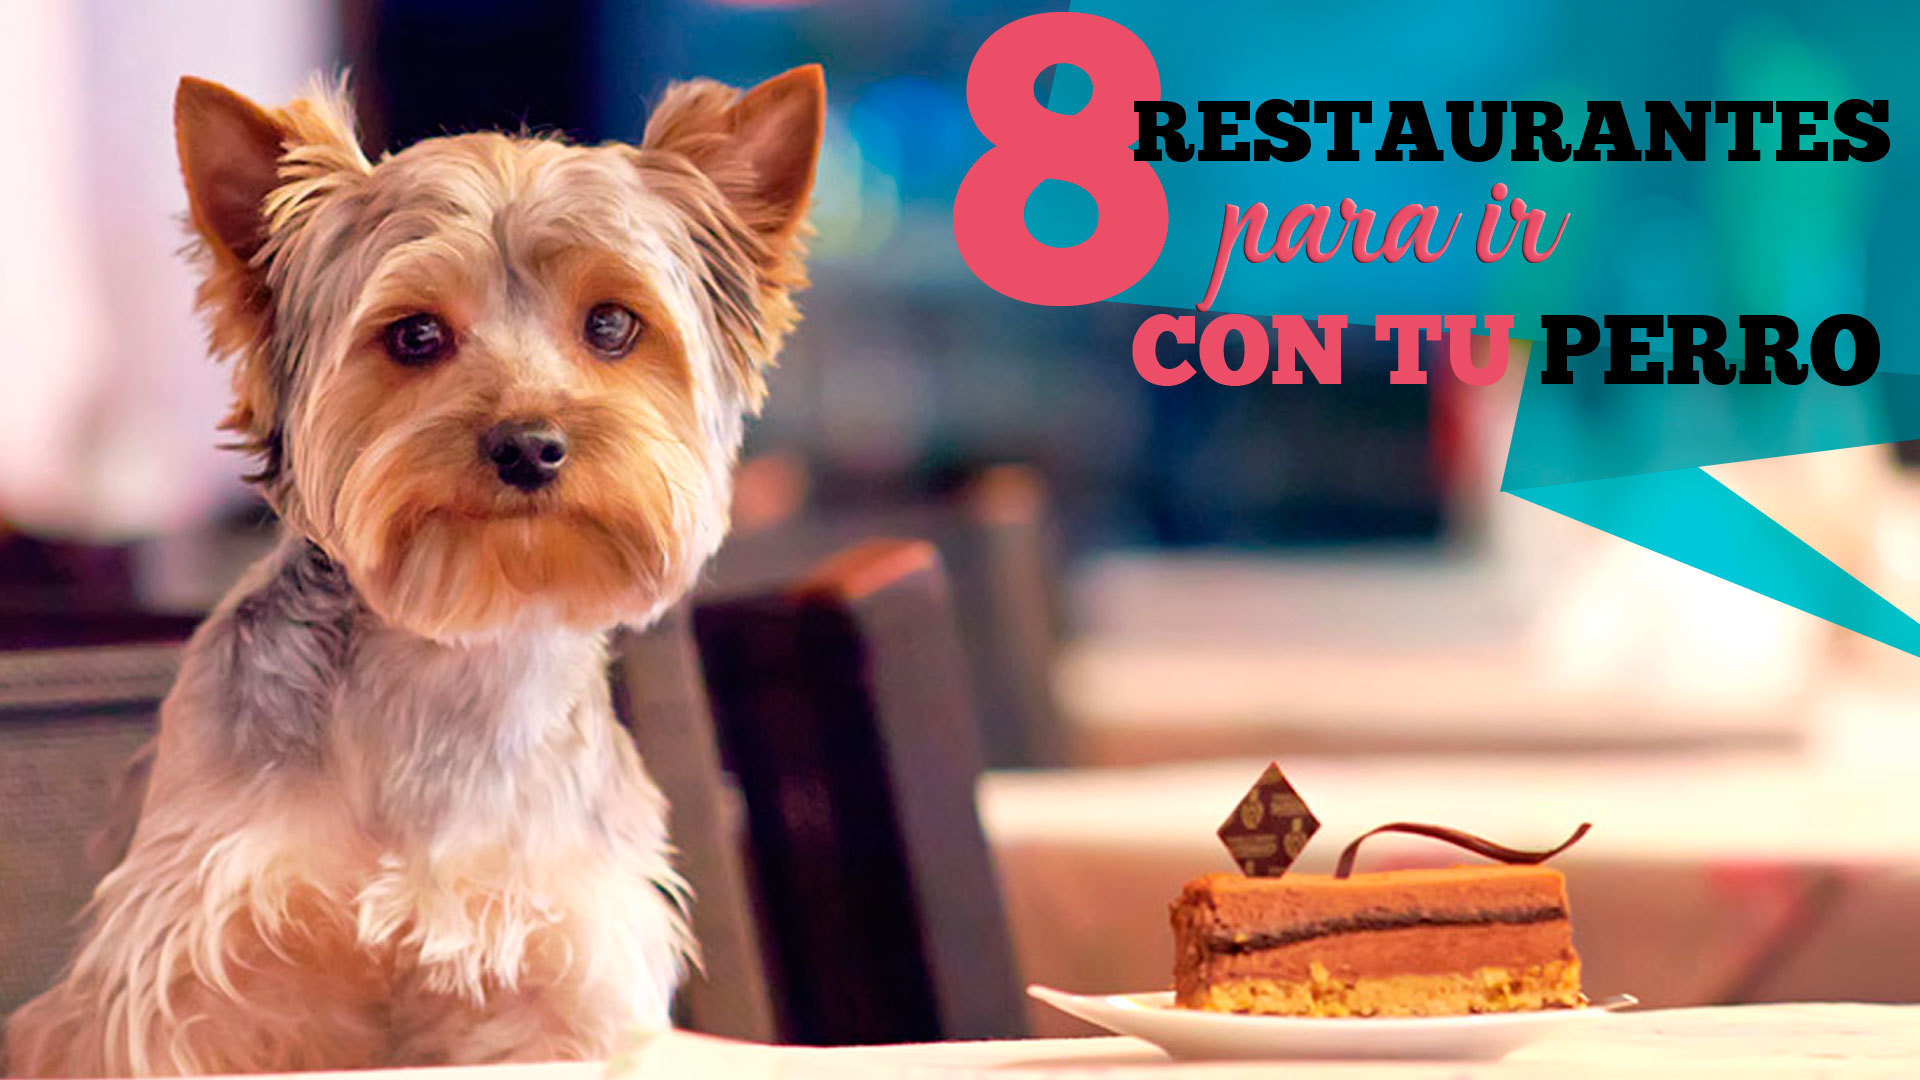 Temporada 1 8 restaurantes increíbles para comer con tu perro